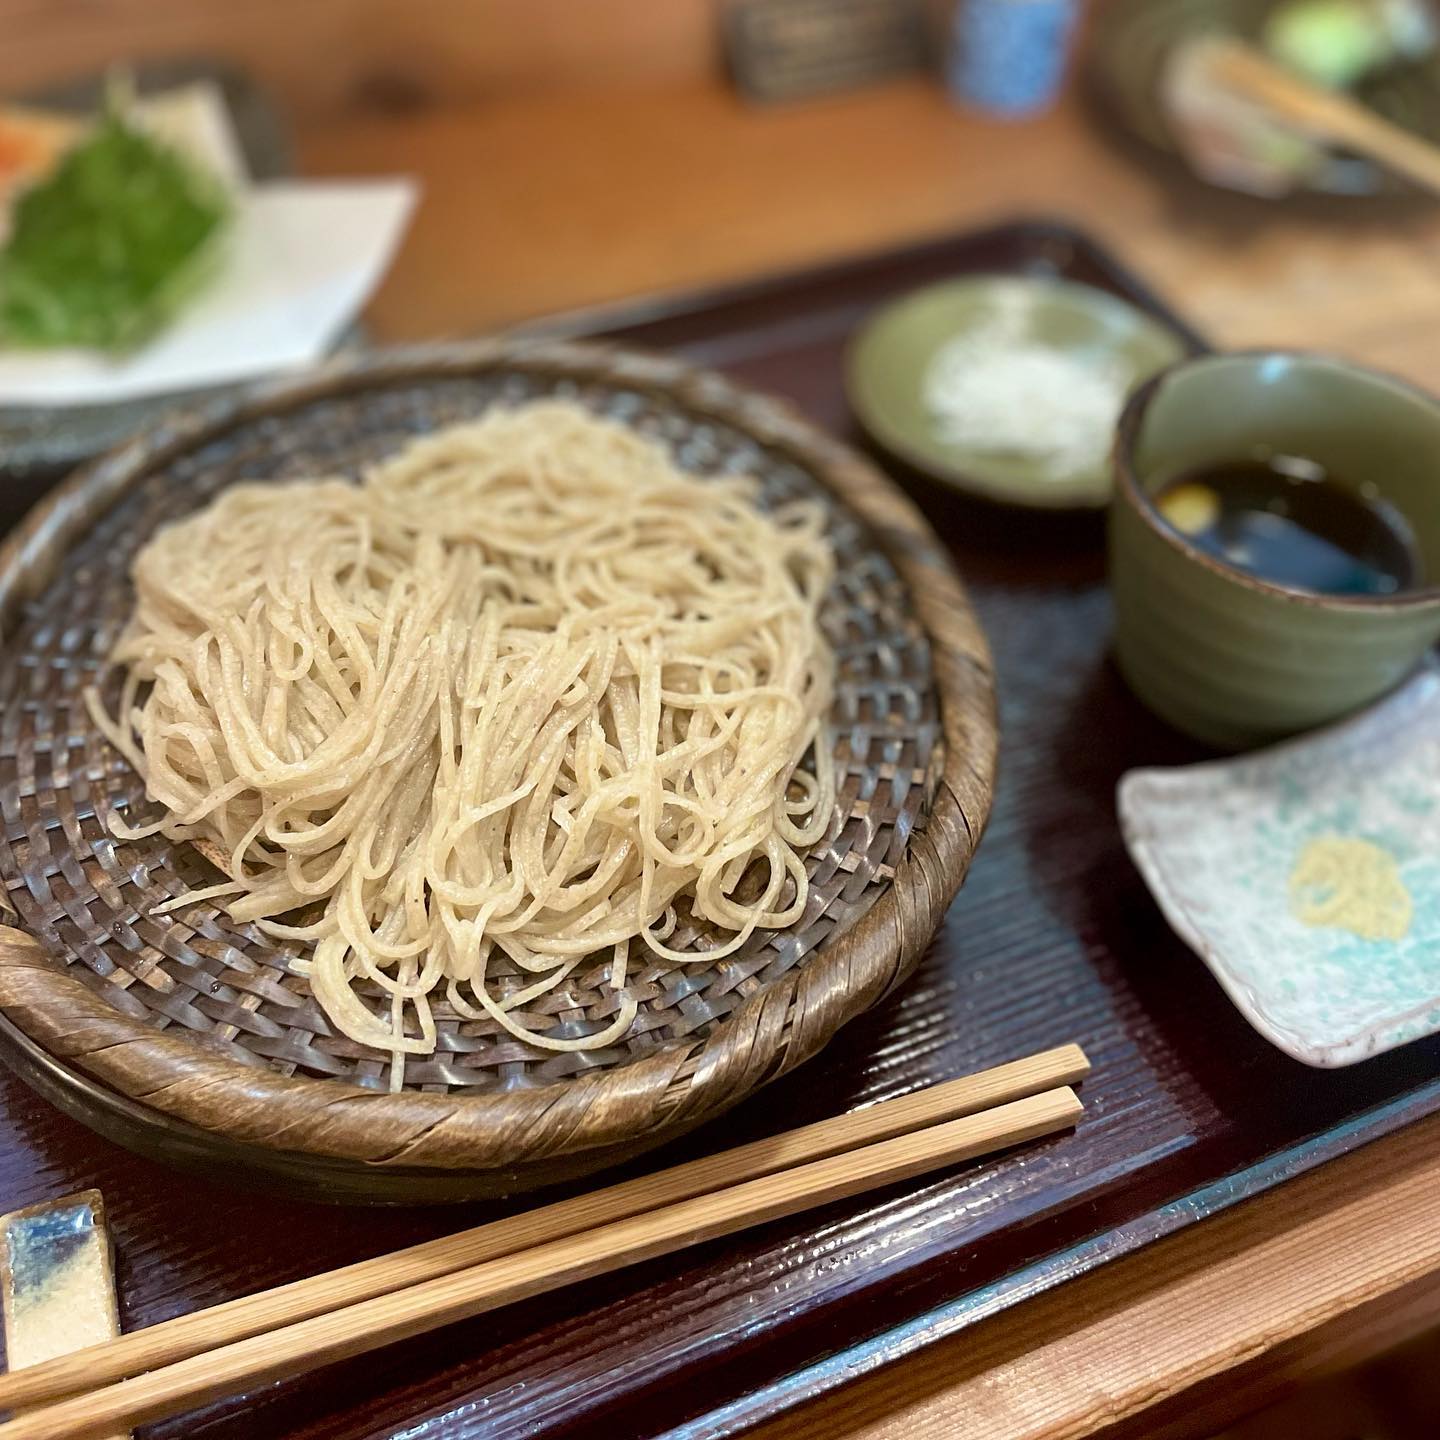 Zaru Soba Recipe – Japanese Cooking 101